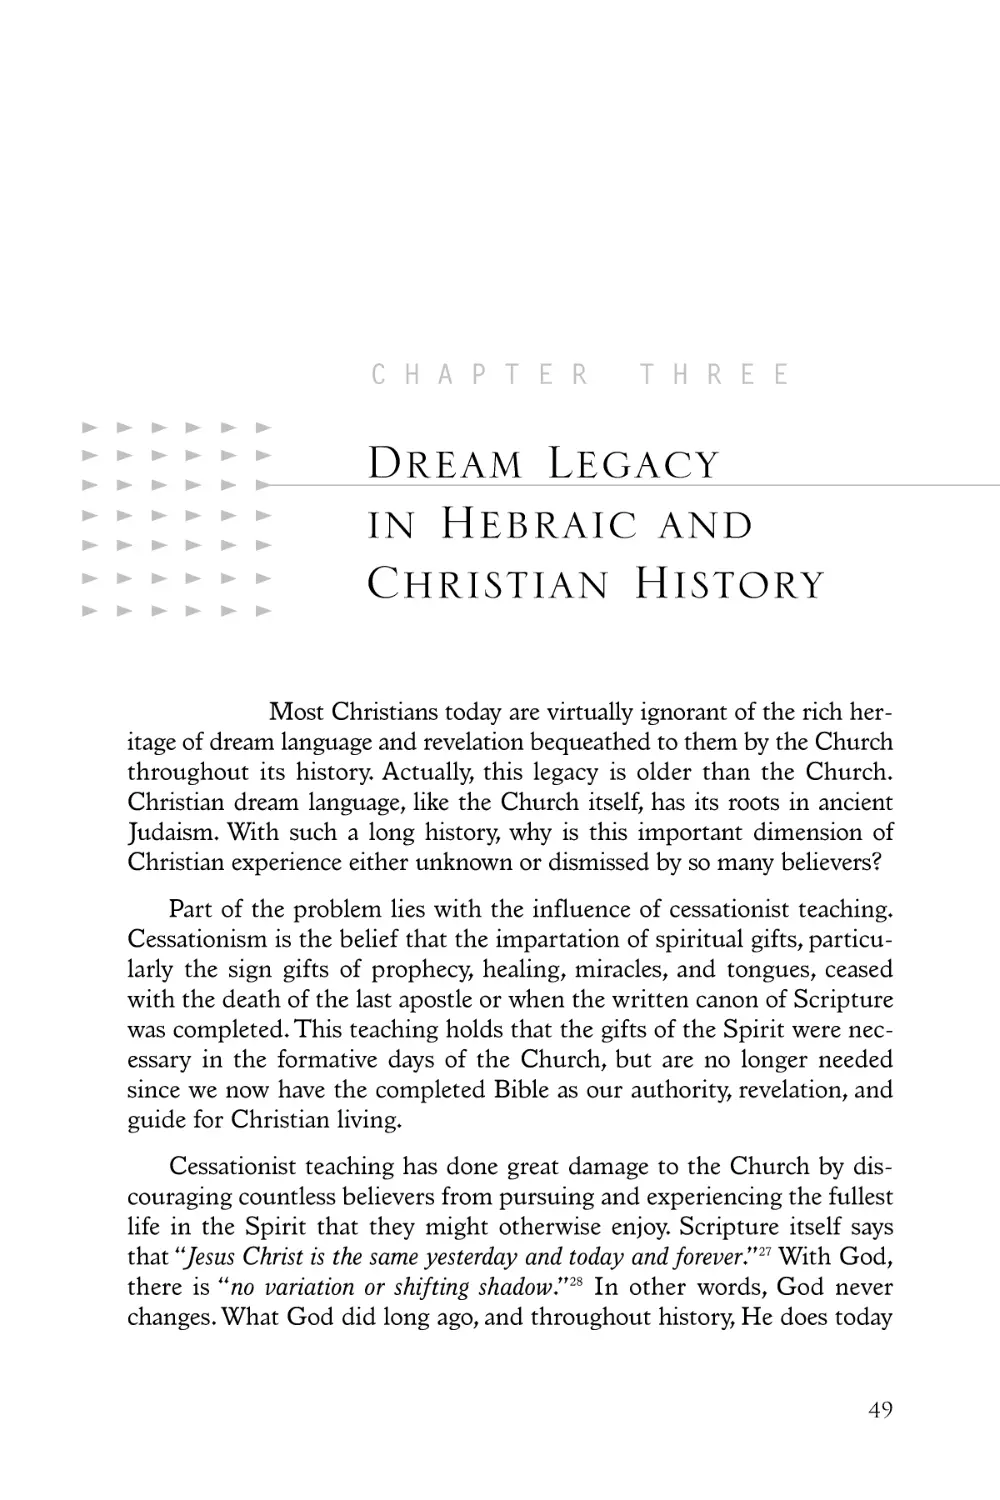 Dream Legacy in Hebraic and Christian History